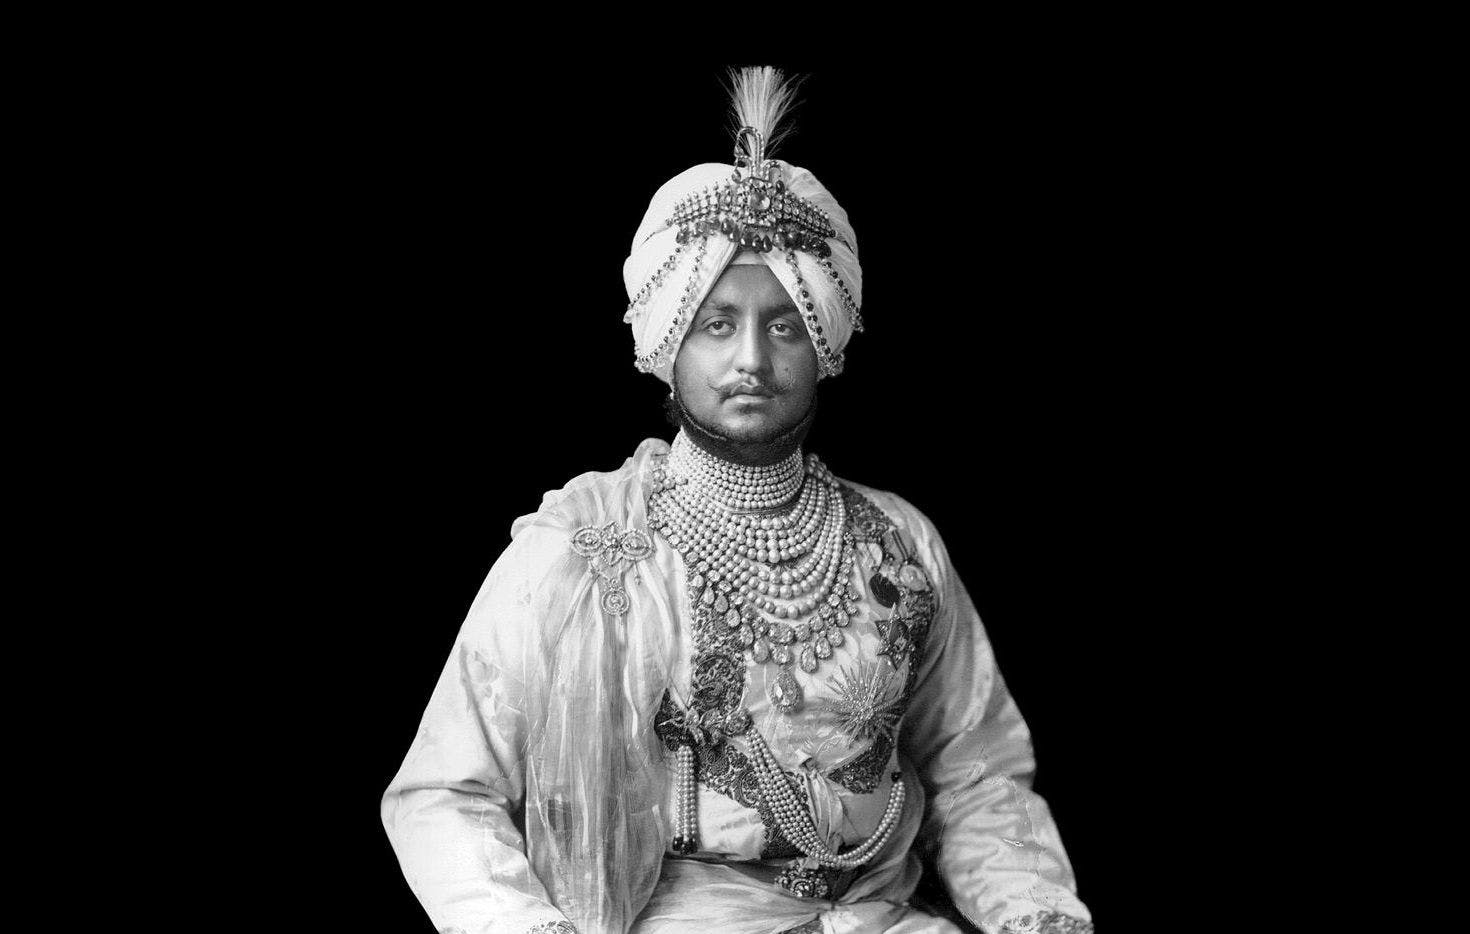 Maharaja of Patiala, Bhupinder Singh